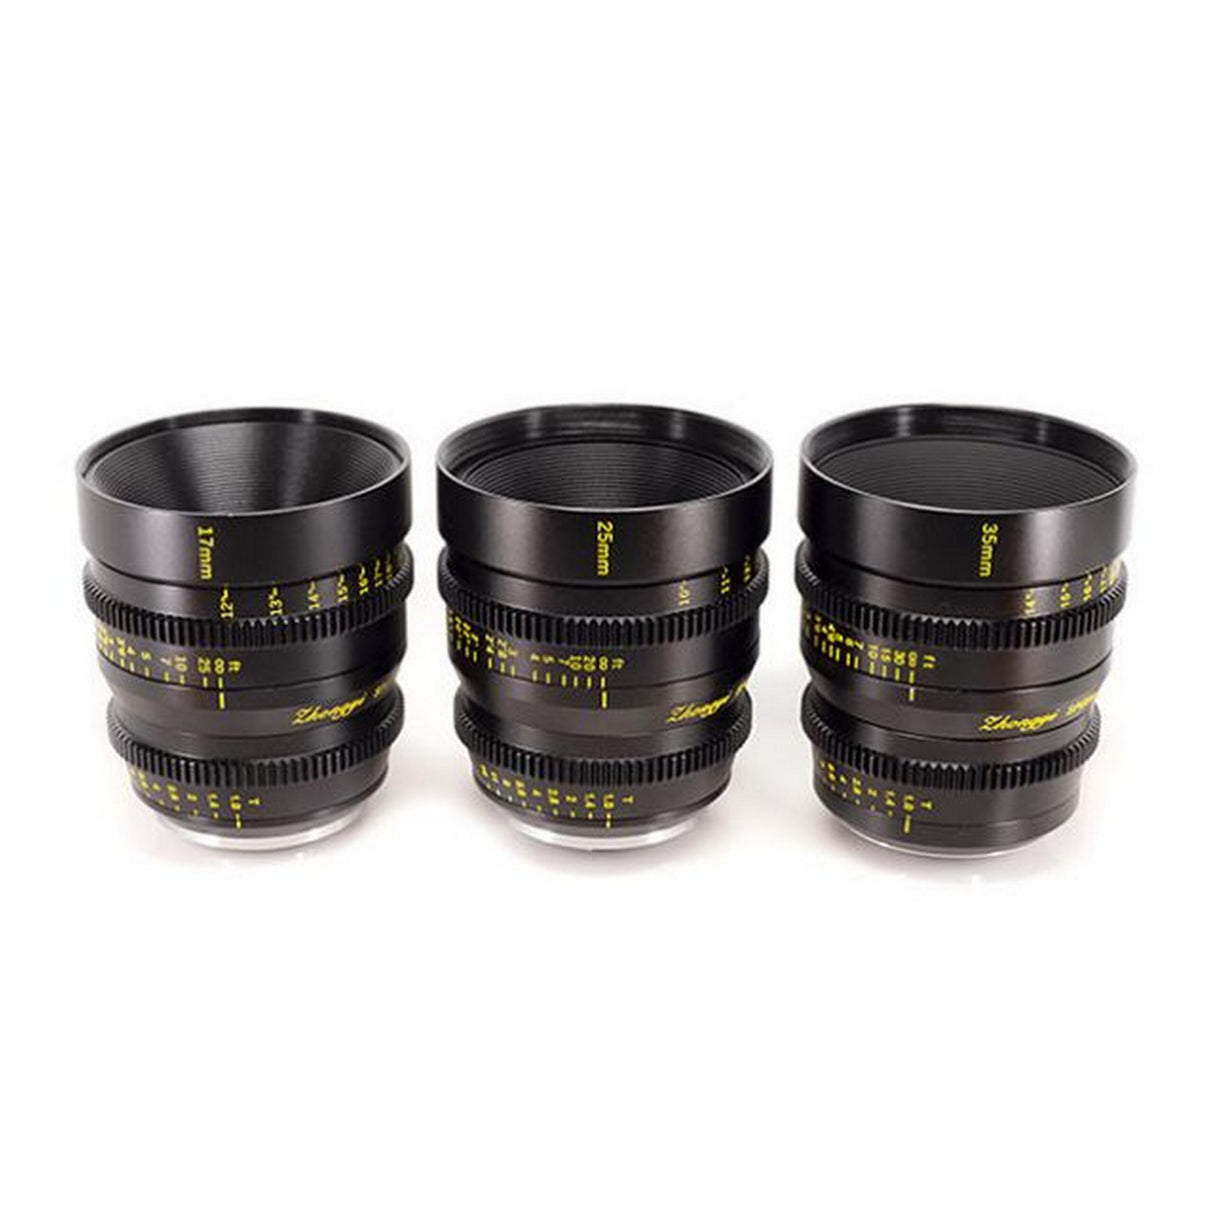 Mitakon 17mm, 25mm, 35mm M4/3 Lens Set with Hard Case